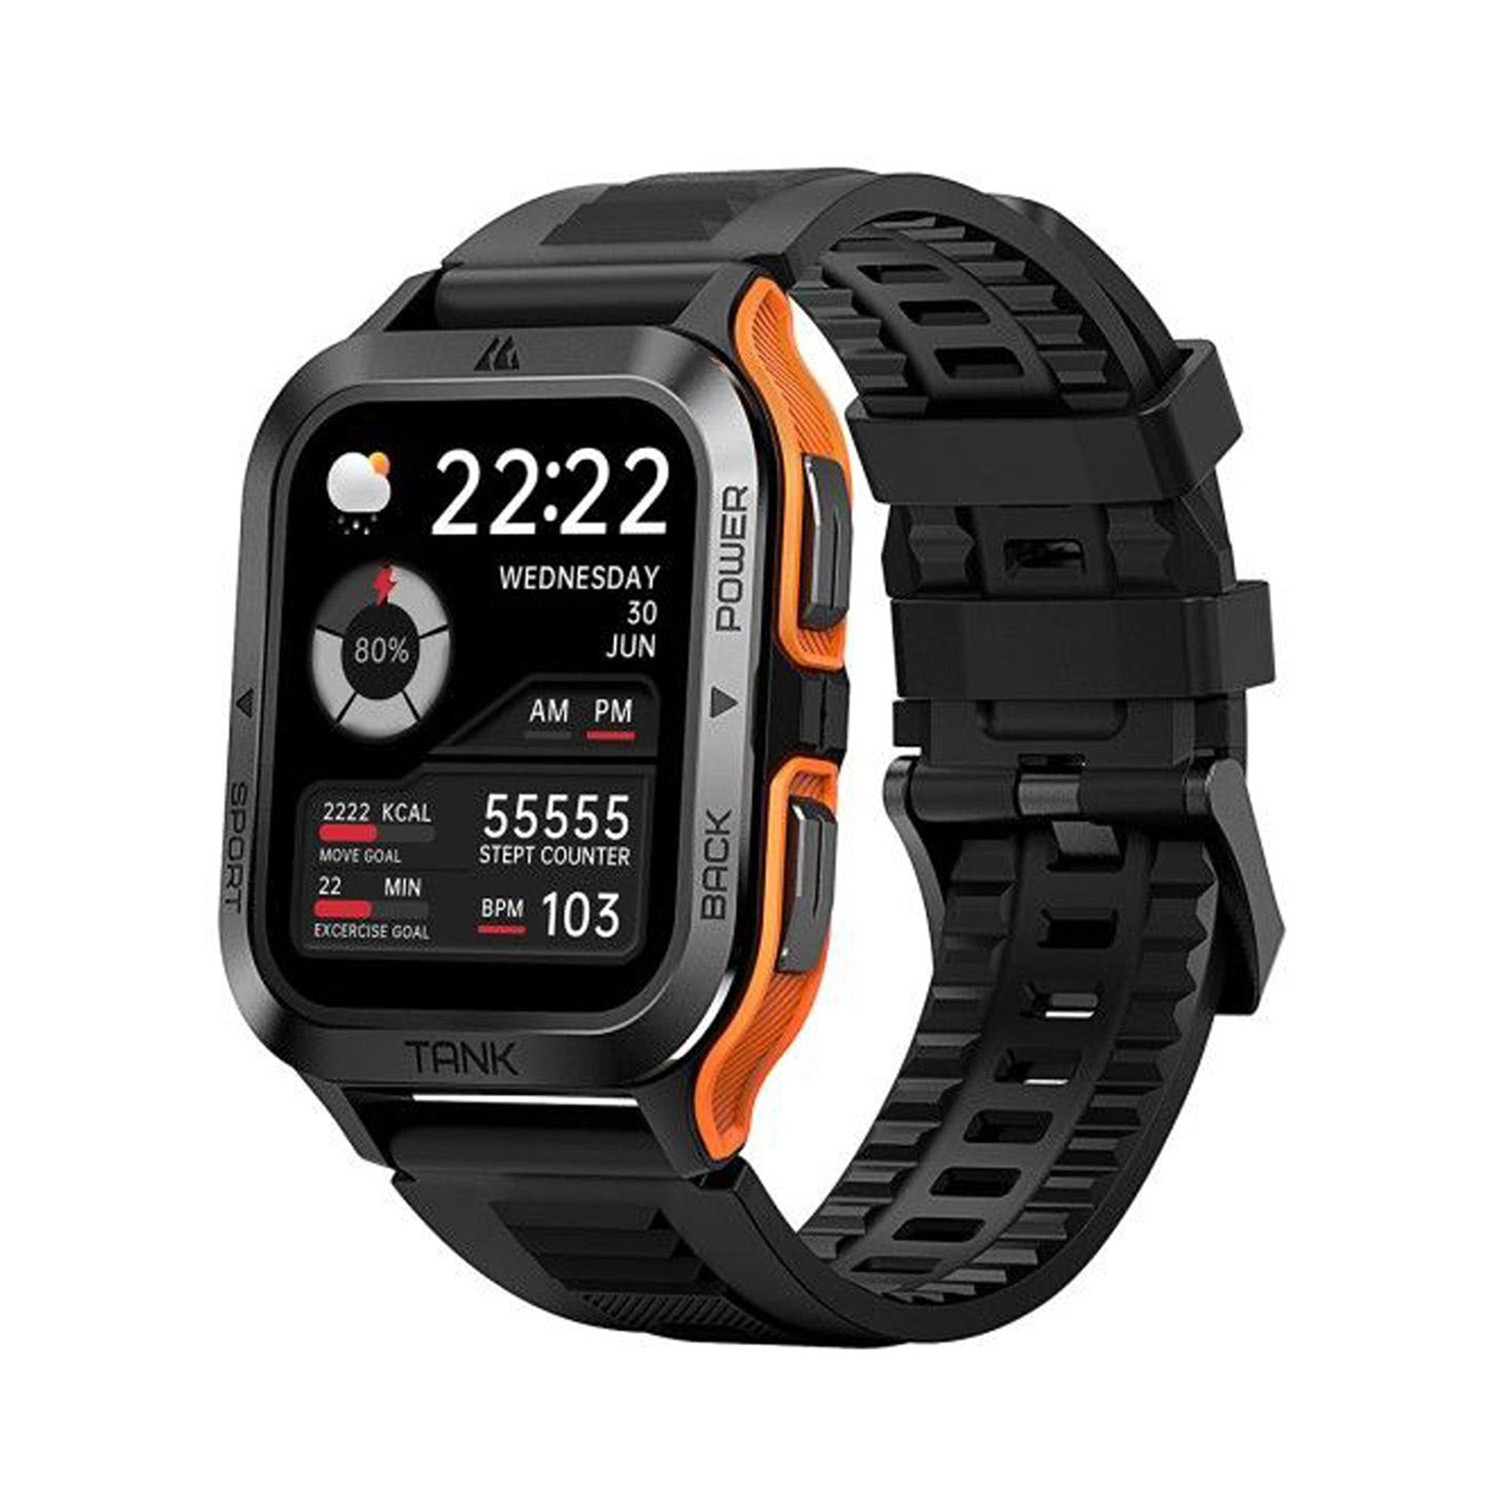 KOSPET Brand TANK - M2 New Fashionable Waterproof Smartwatch